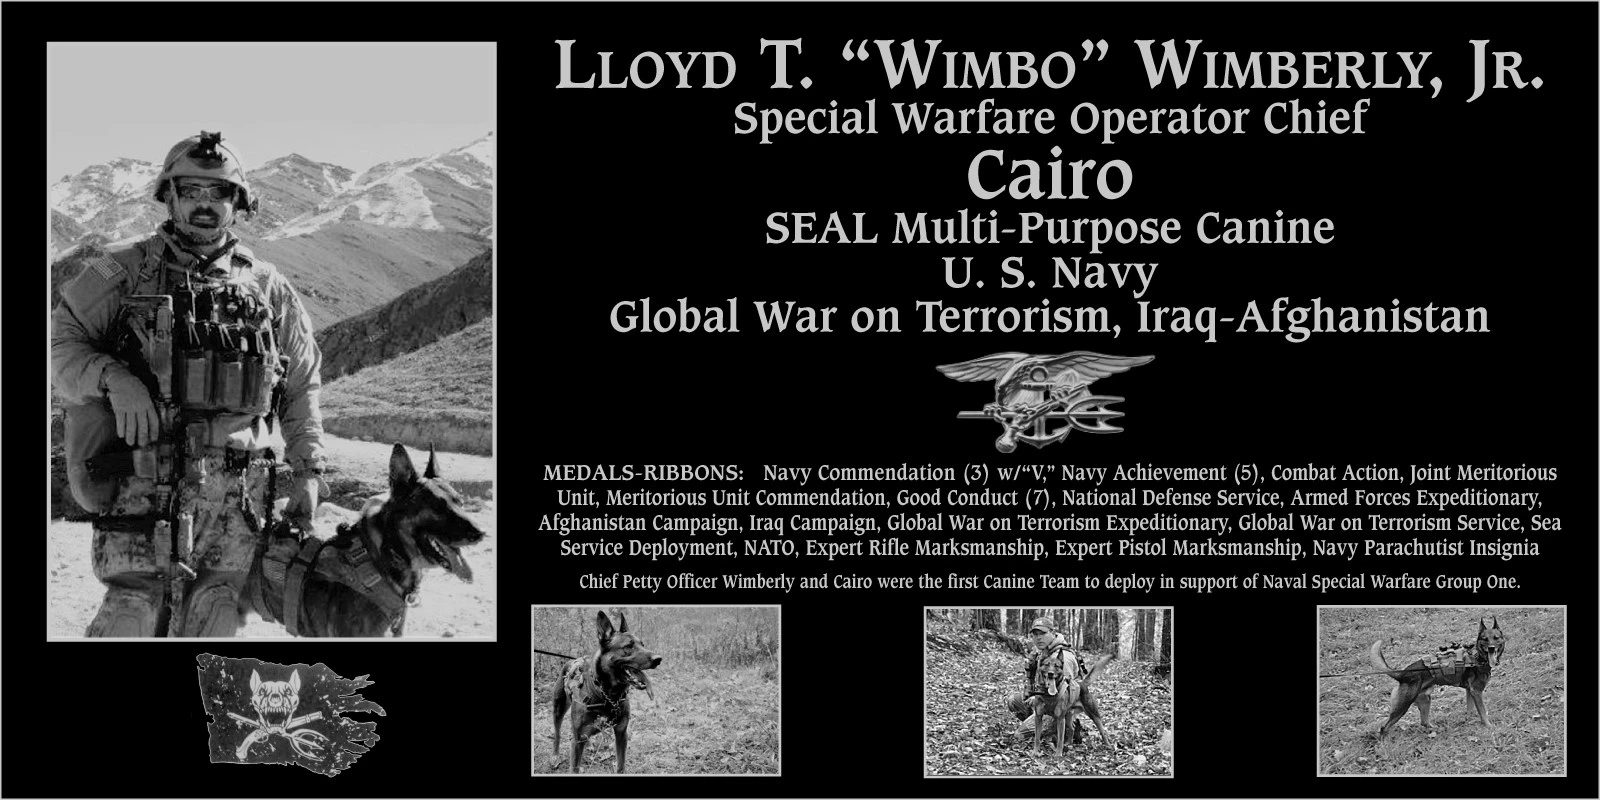 Lloyd T. “Wimbo” Wimberly, jr